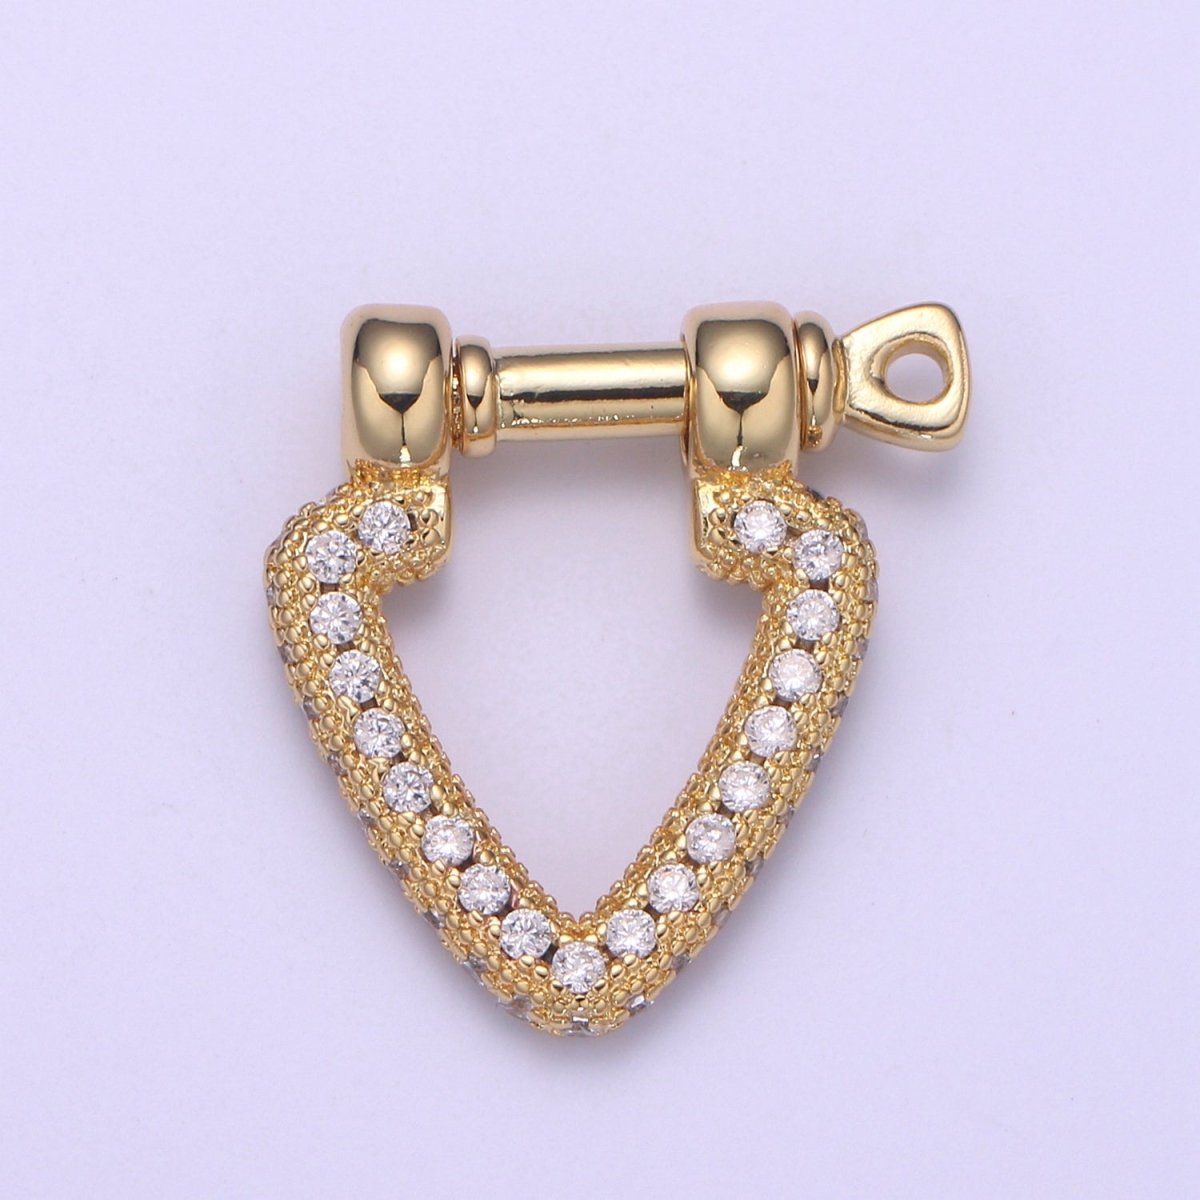 Micor pave Clasp Gold Filled Screw clasp lock, Anchor Shackle, Gold Triangle Cz Bracelet Necklace Clasp Sailor Bracelet Clasp Supply L-260 - DLUXCA